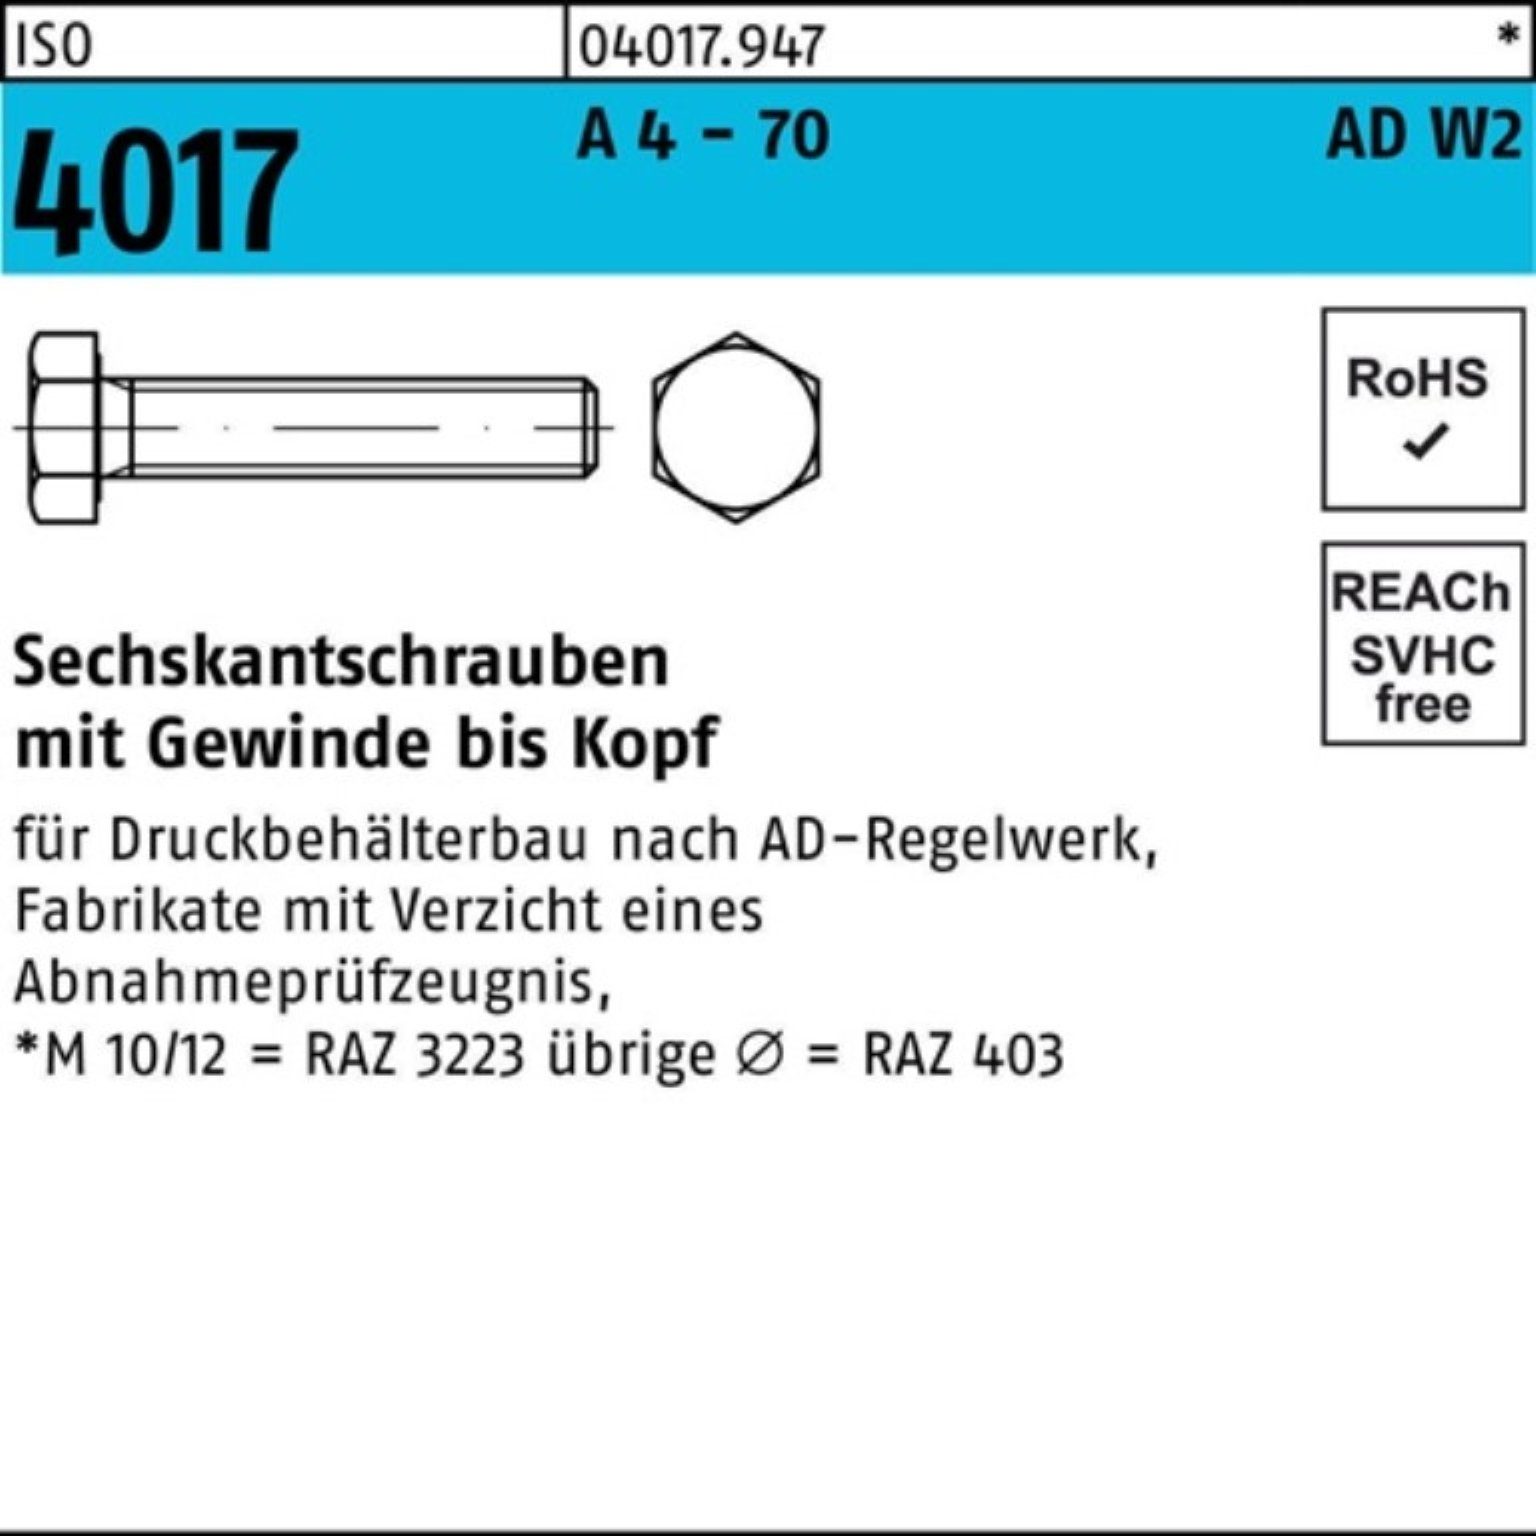 Bufab Sechskantschraube 100er Pack Sechskantschraube ISO 4017 VG M10x 70 A 4 - 70 AD-W2 50 St